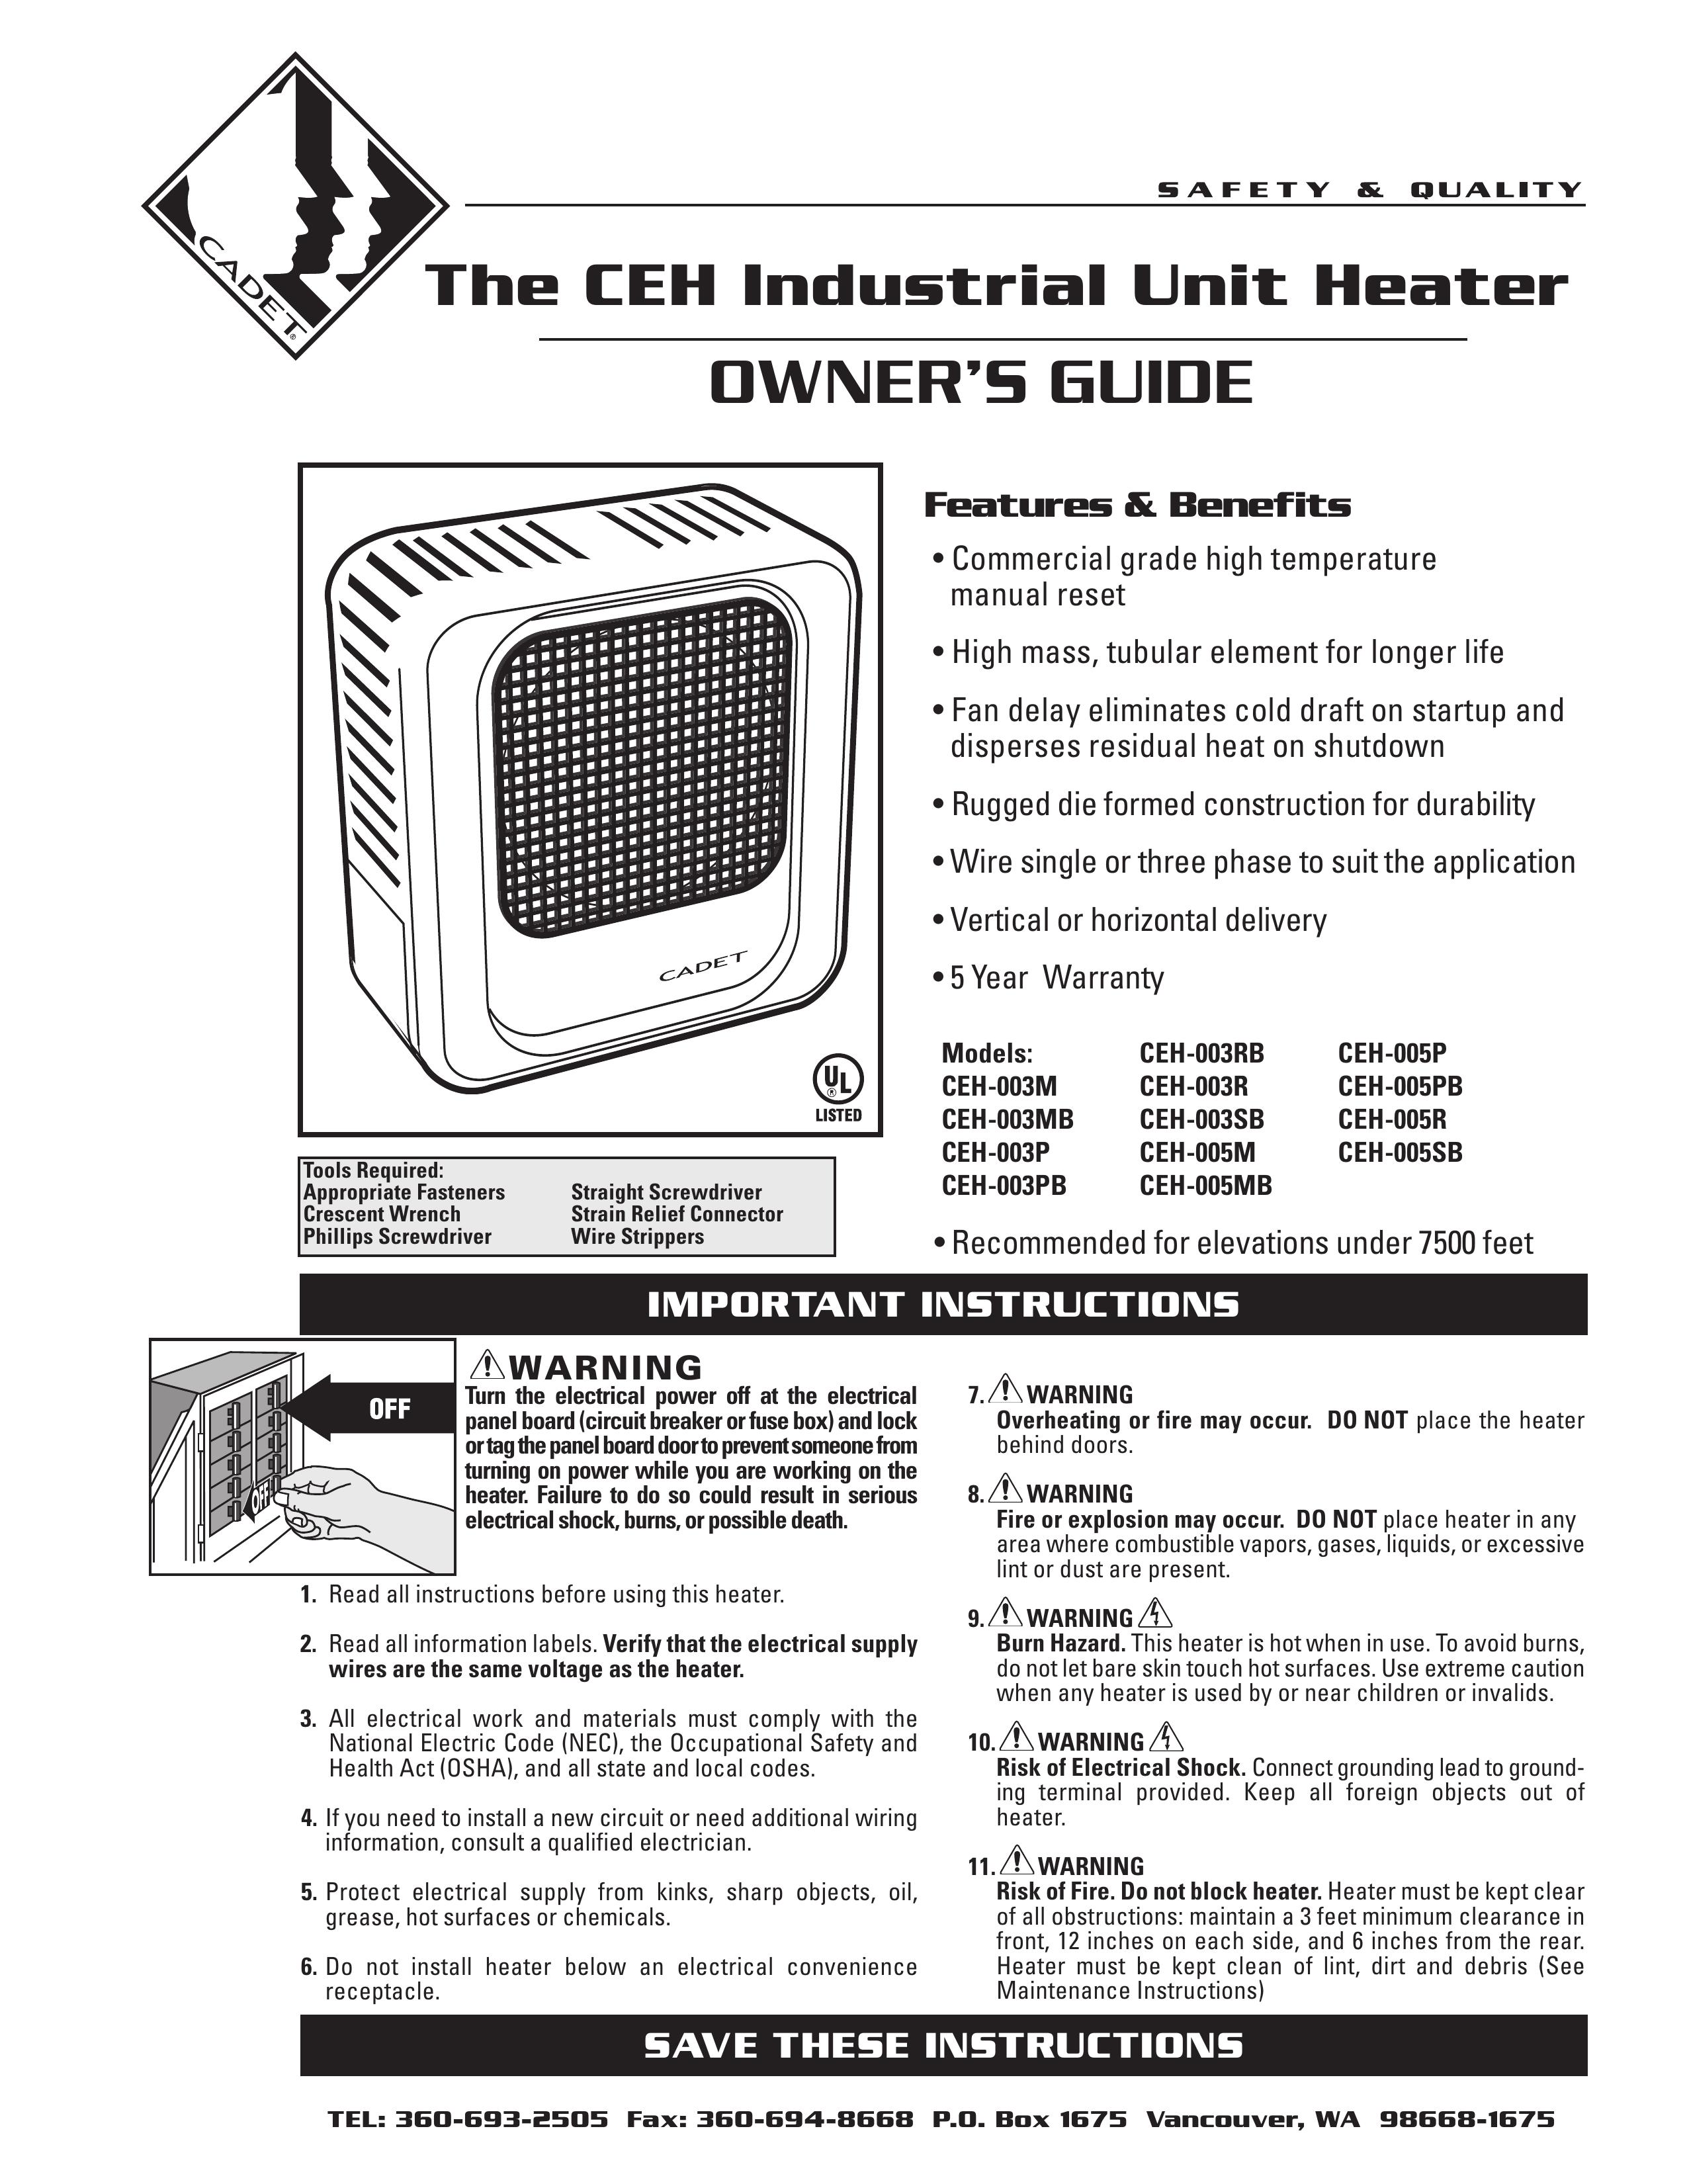 Cadet CEH-003M Patio Heater User Manual